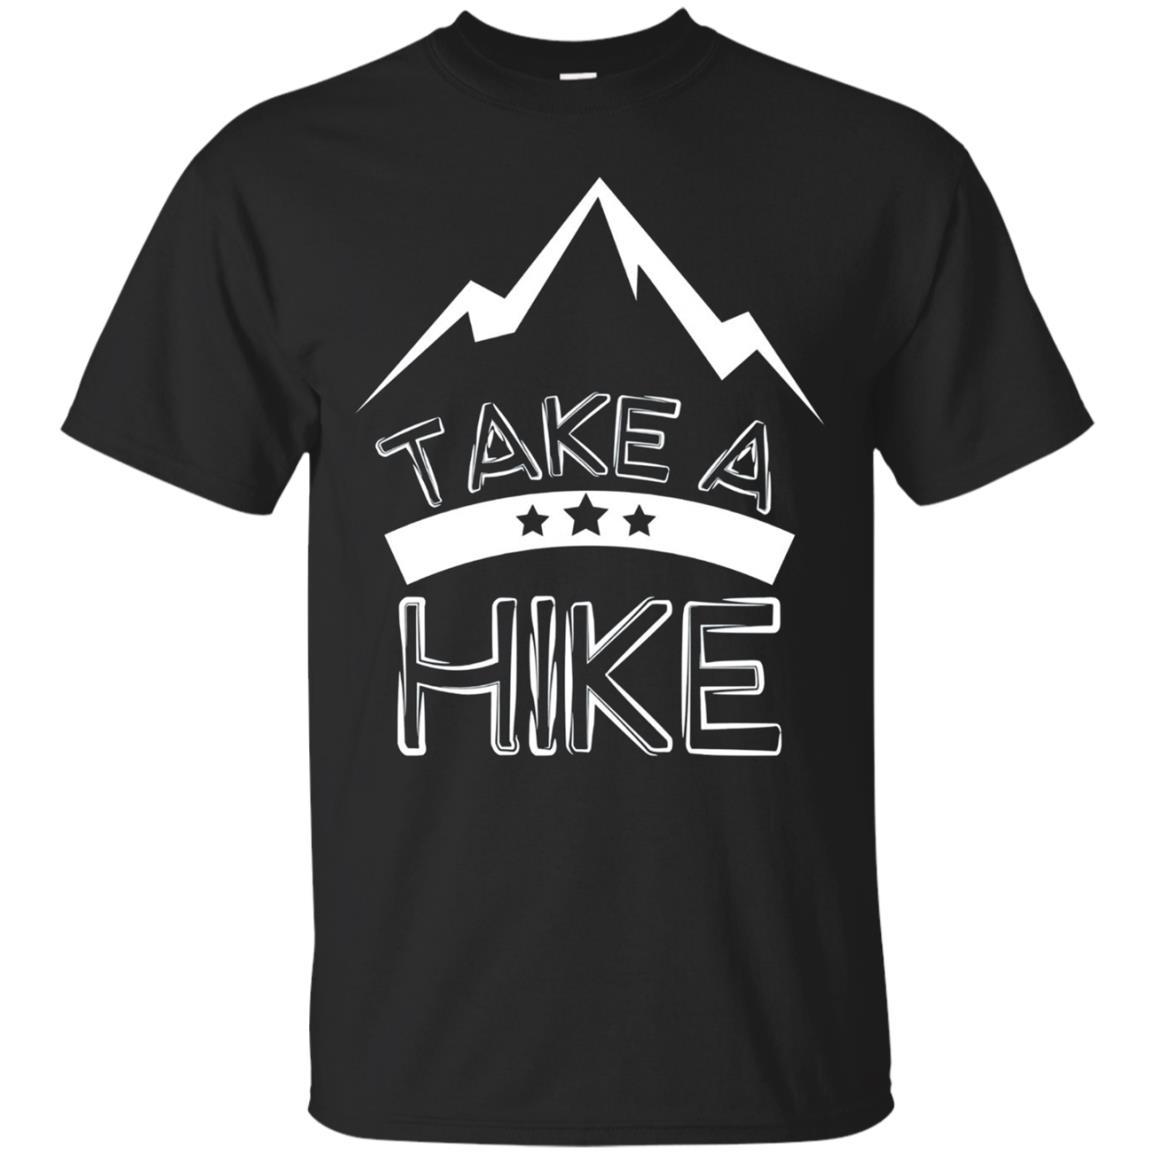 Take A Hike Shirt - Funny Hiking & Camping T-shirt Gift